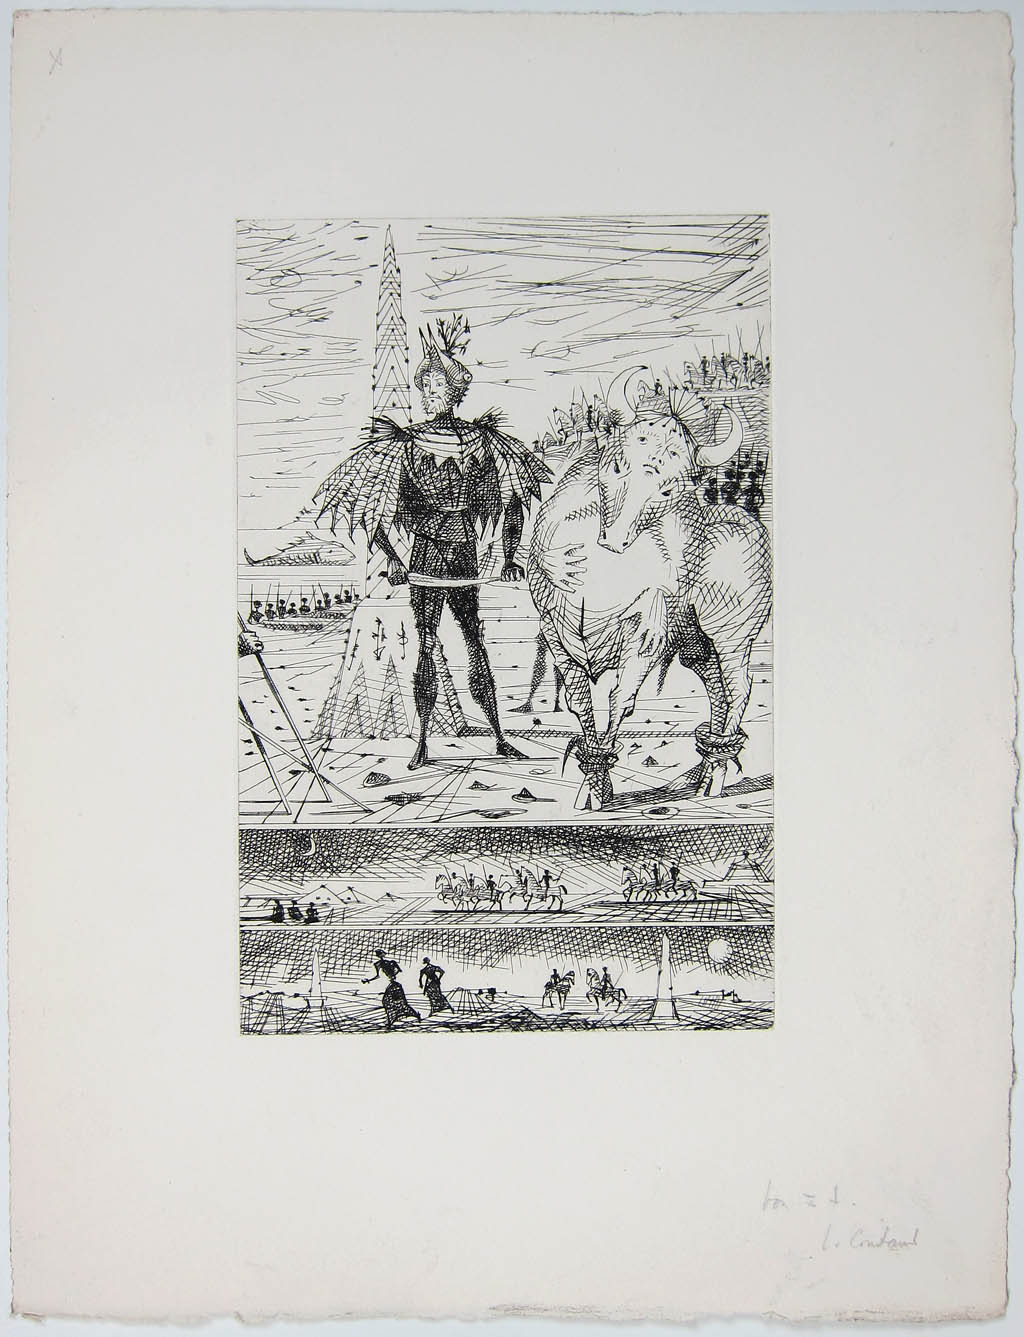 Lucien Coutaud - Le Taureau Blanc (Plate X) - 1956 etching